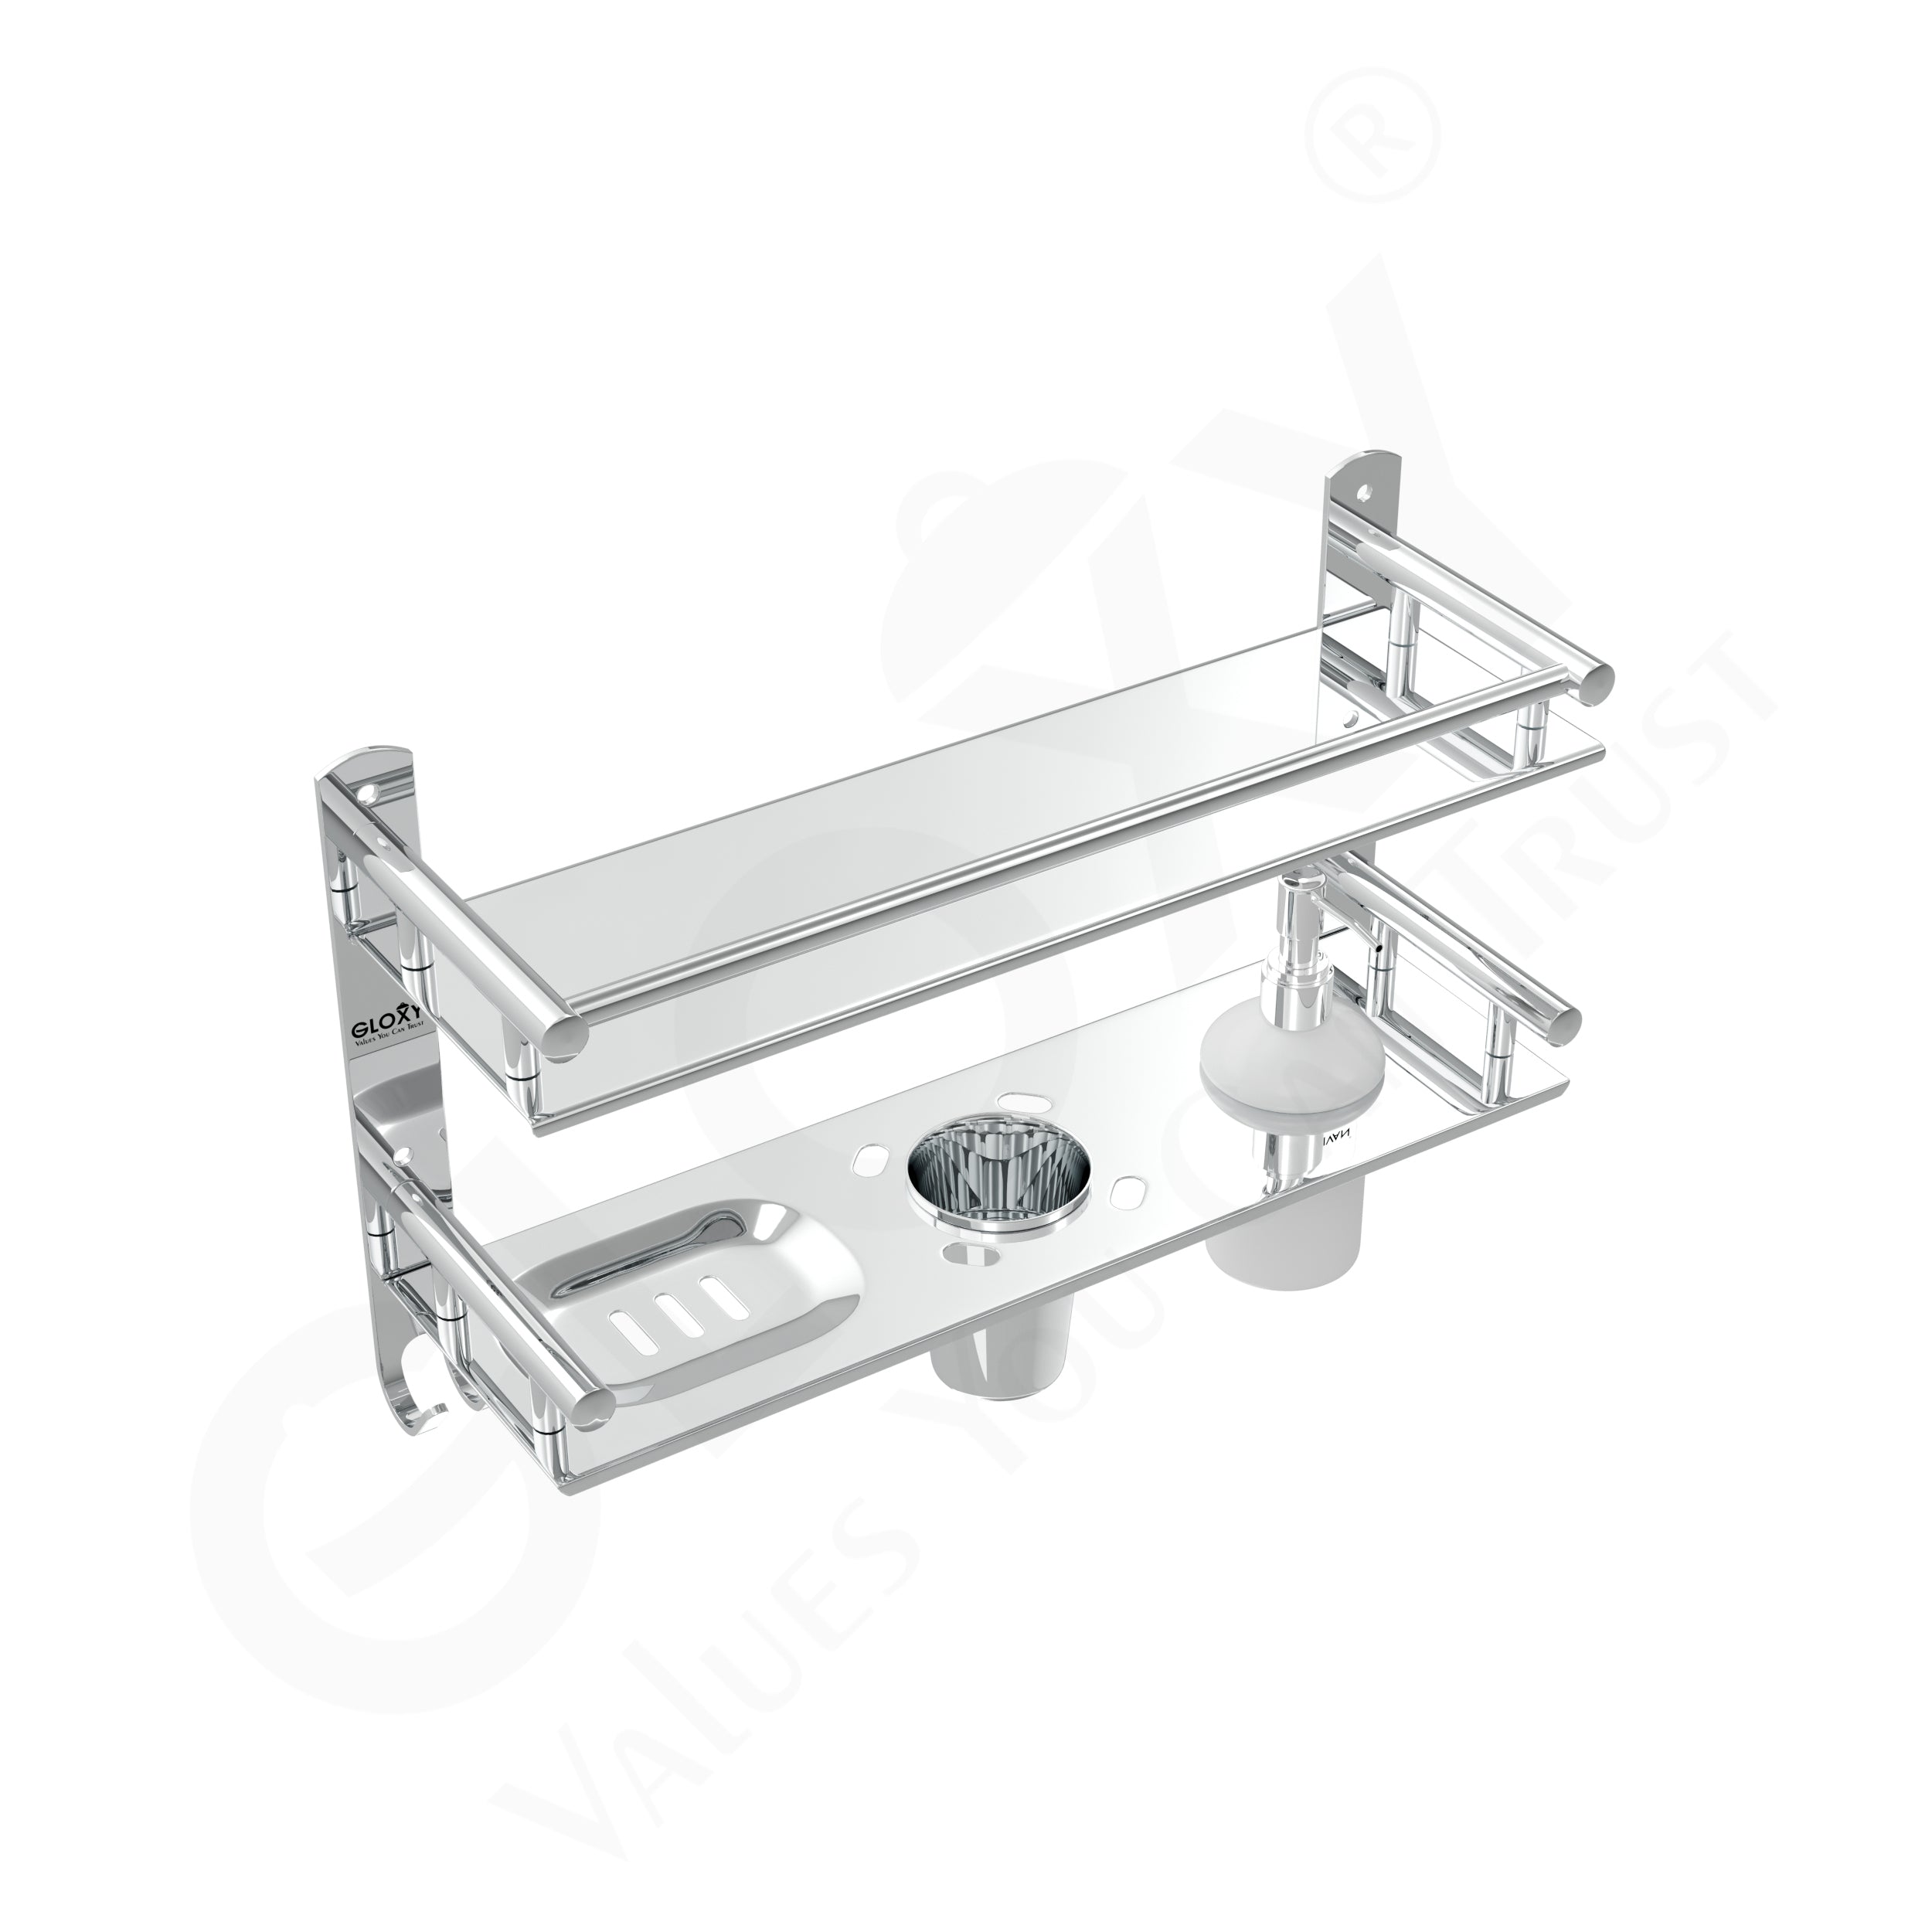 6-in-1 Stainless Steel Bathroom Shelf Set